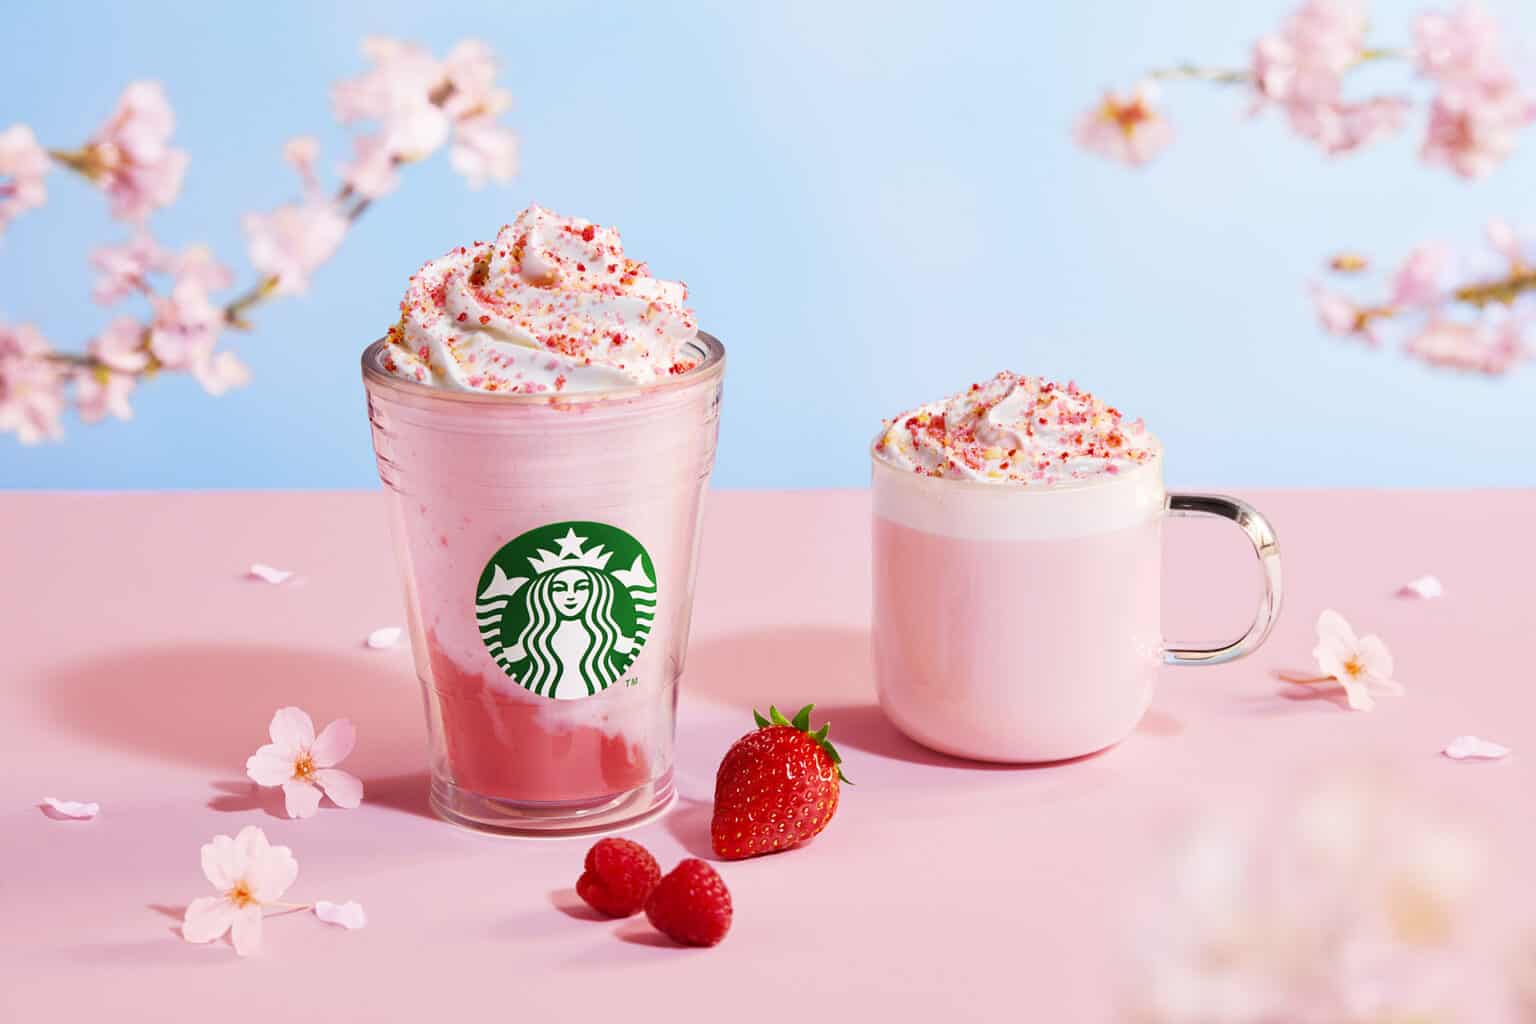 starbucks cherry blossom drink 2021